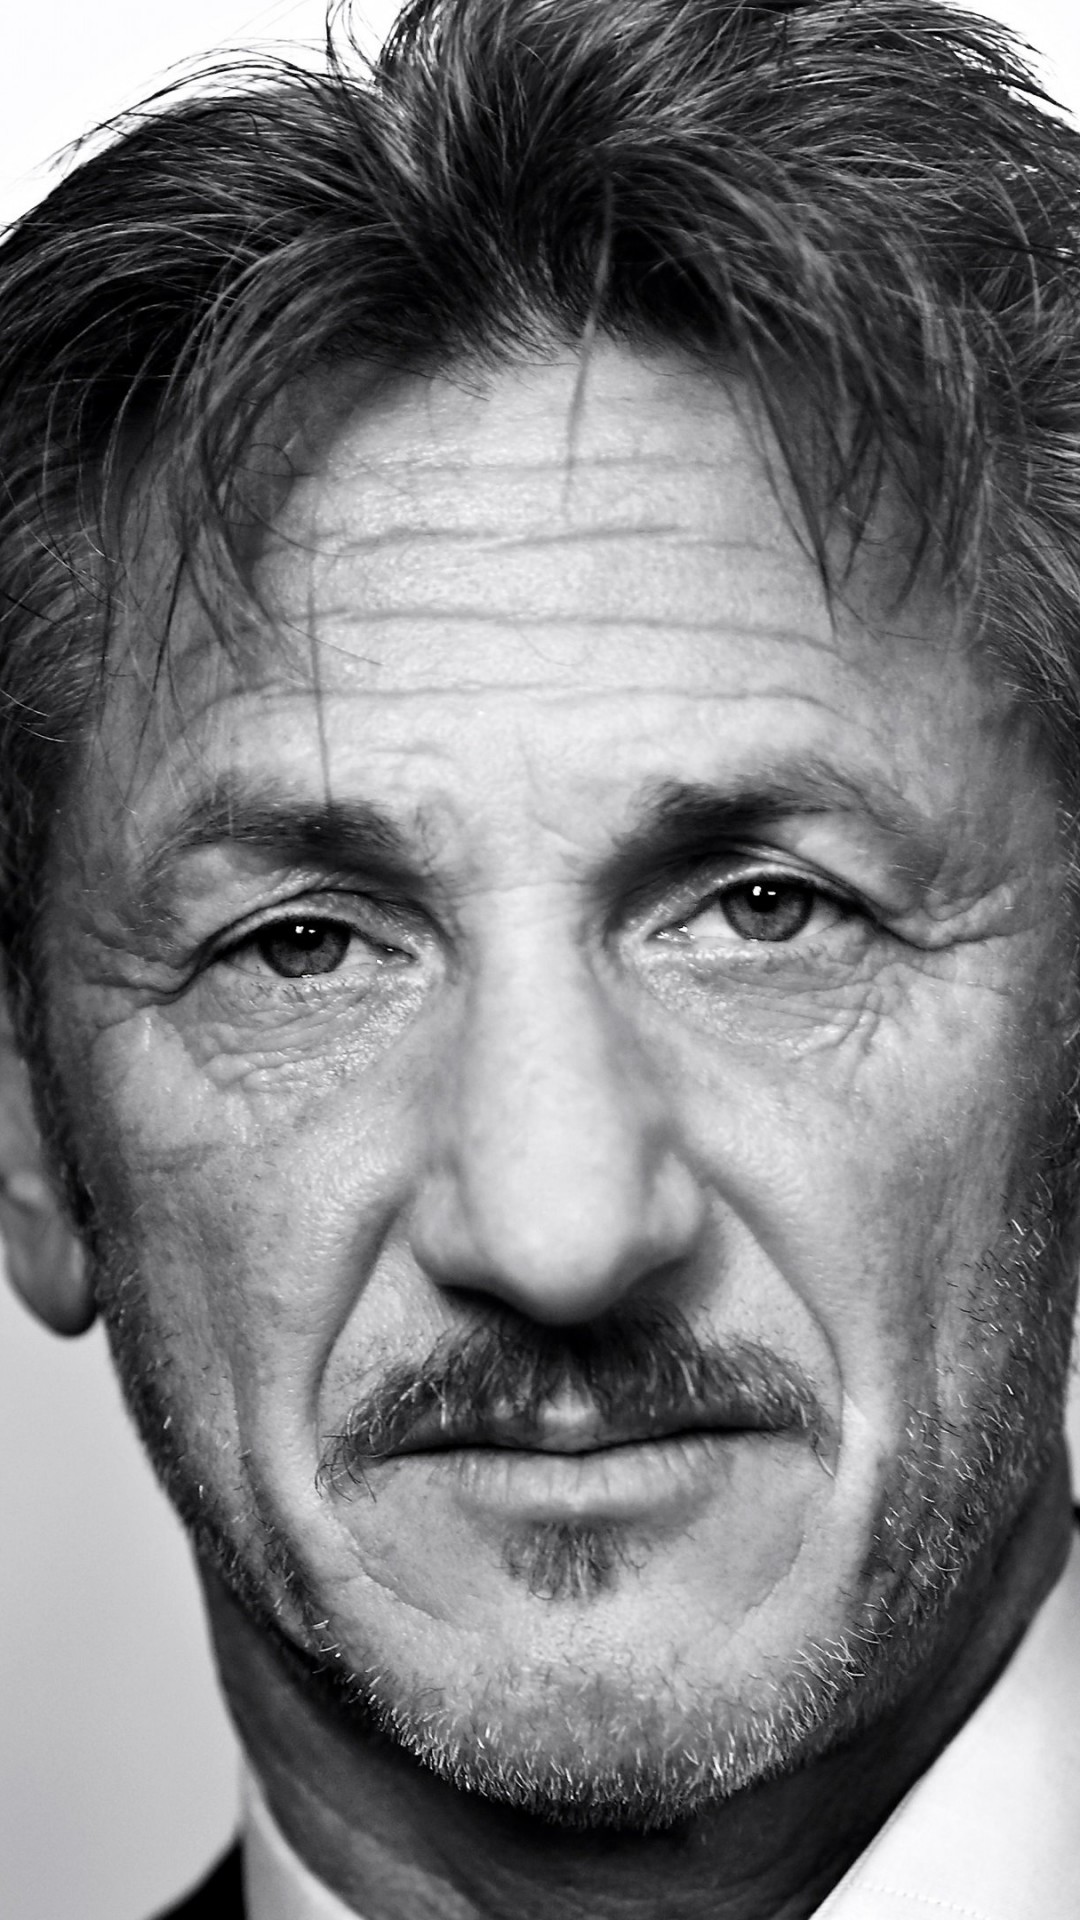 Sean Penn Portrait in Black & White Wallpaper for Motorola Moto X